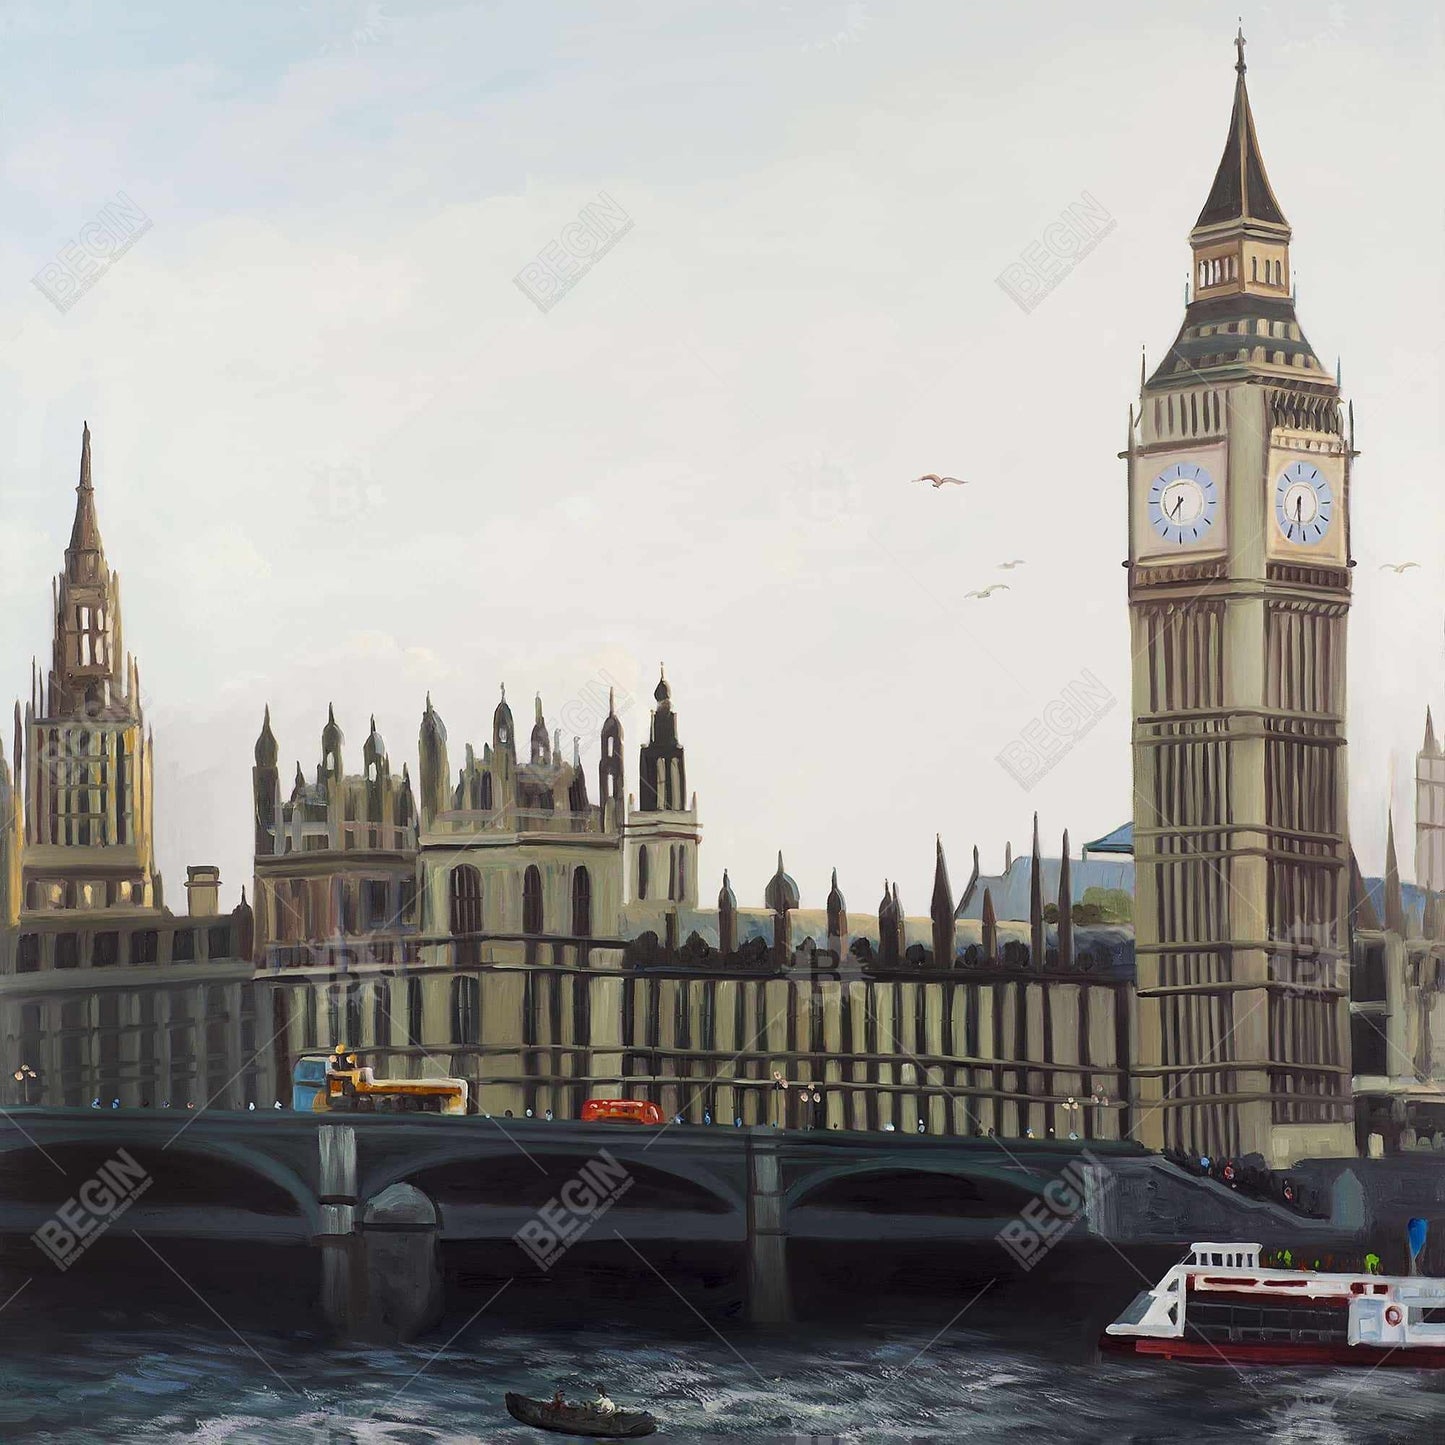 Big ben clock elizabeth tower in london - 08x08 Print on canvas